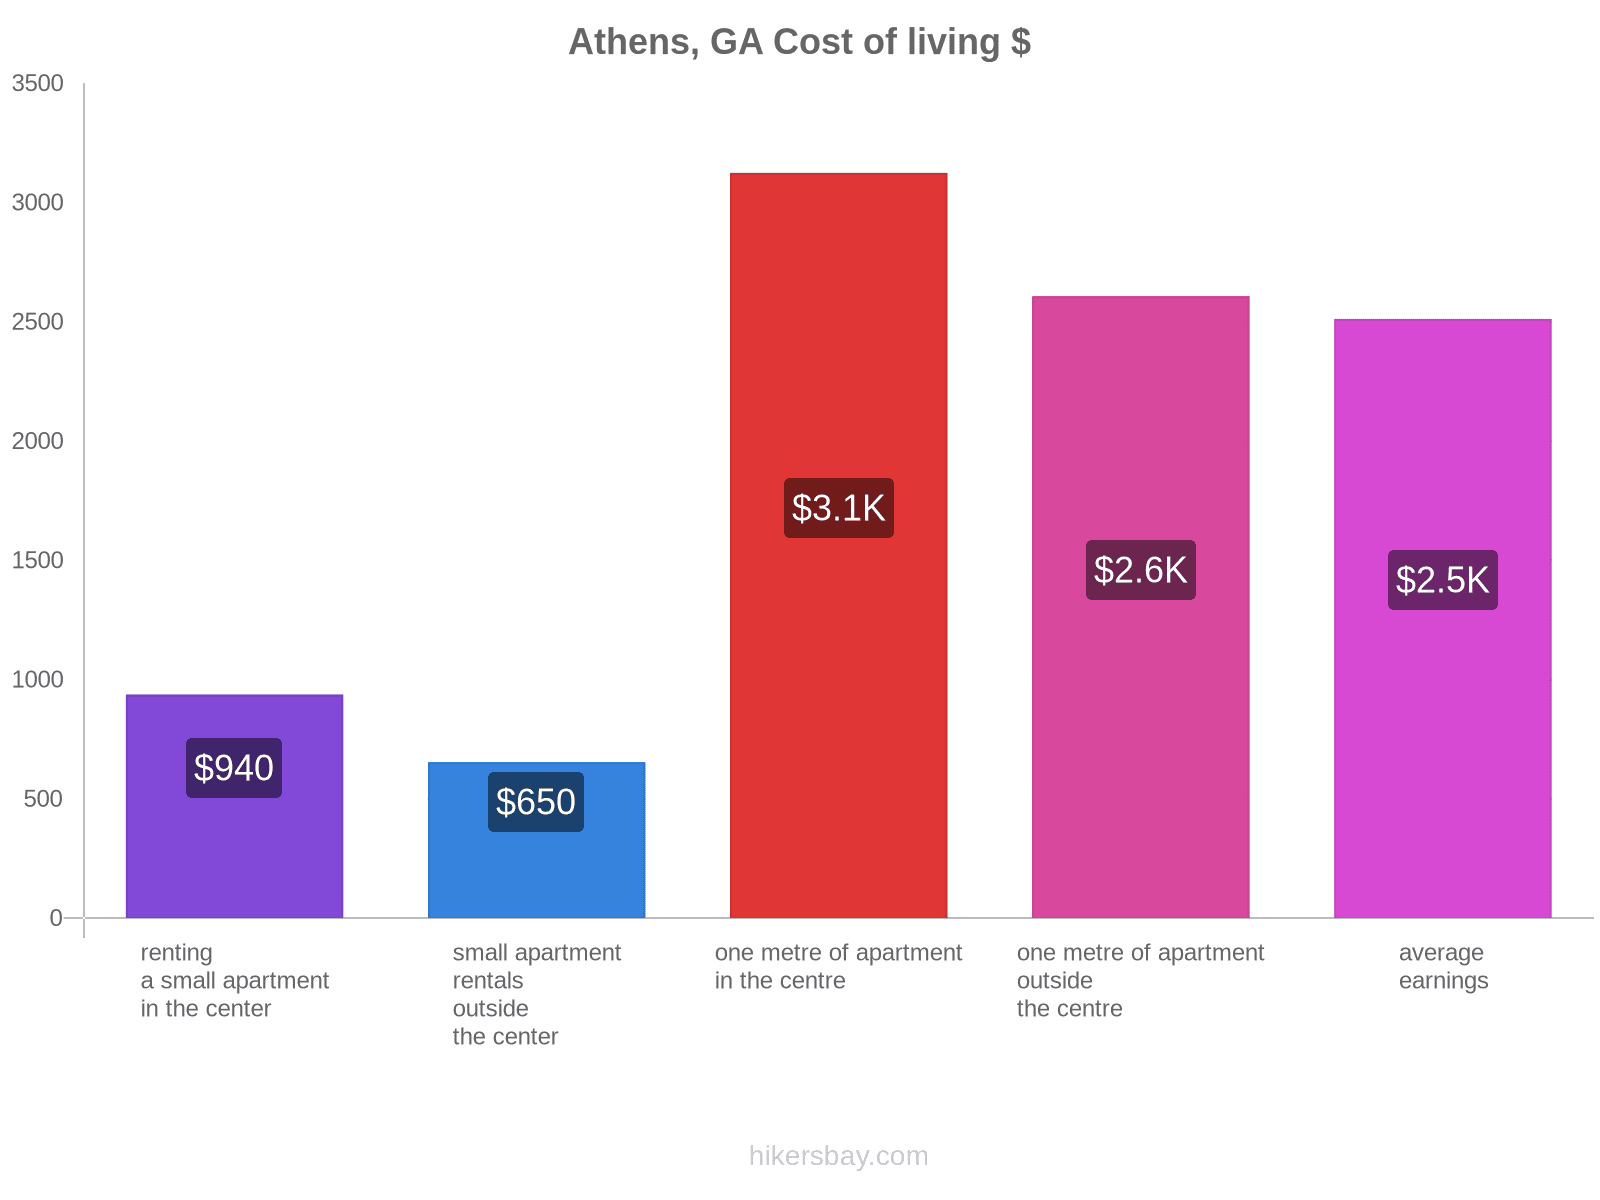 Athens, GA cost of living hikersbay.com